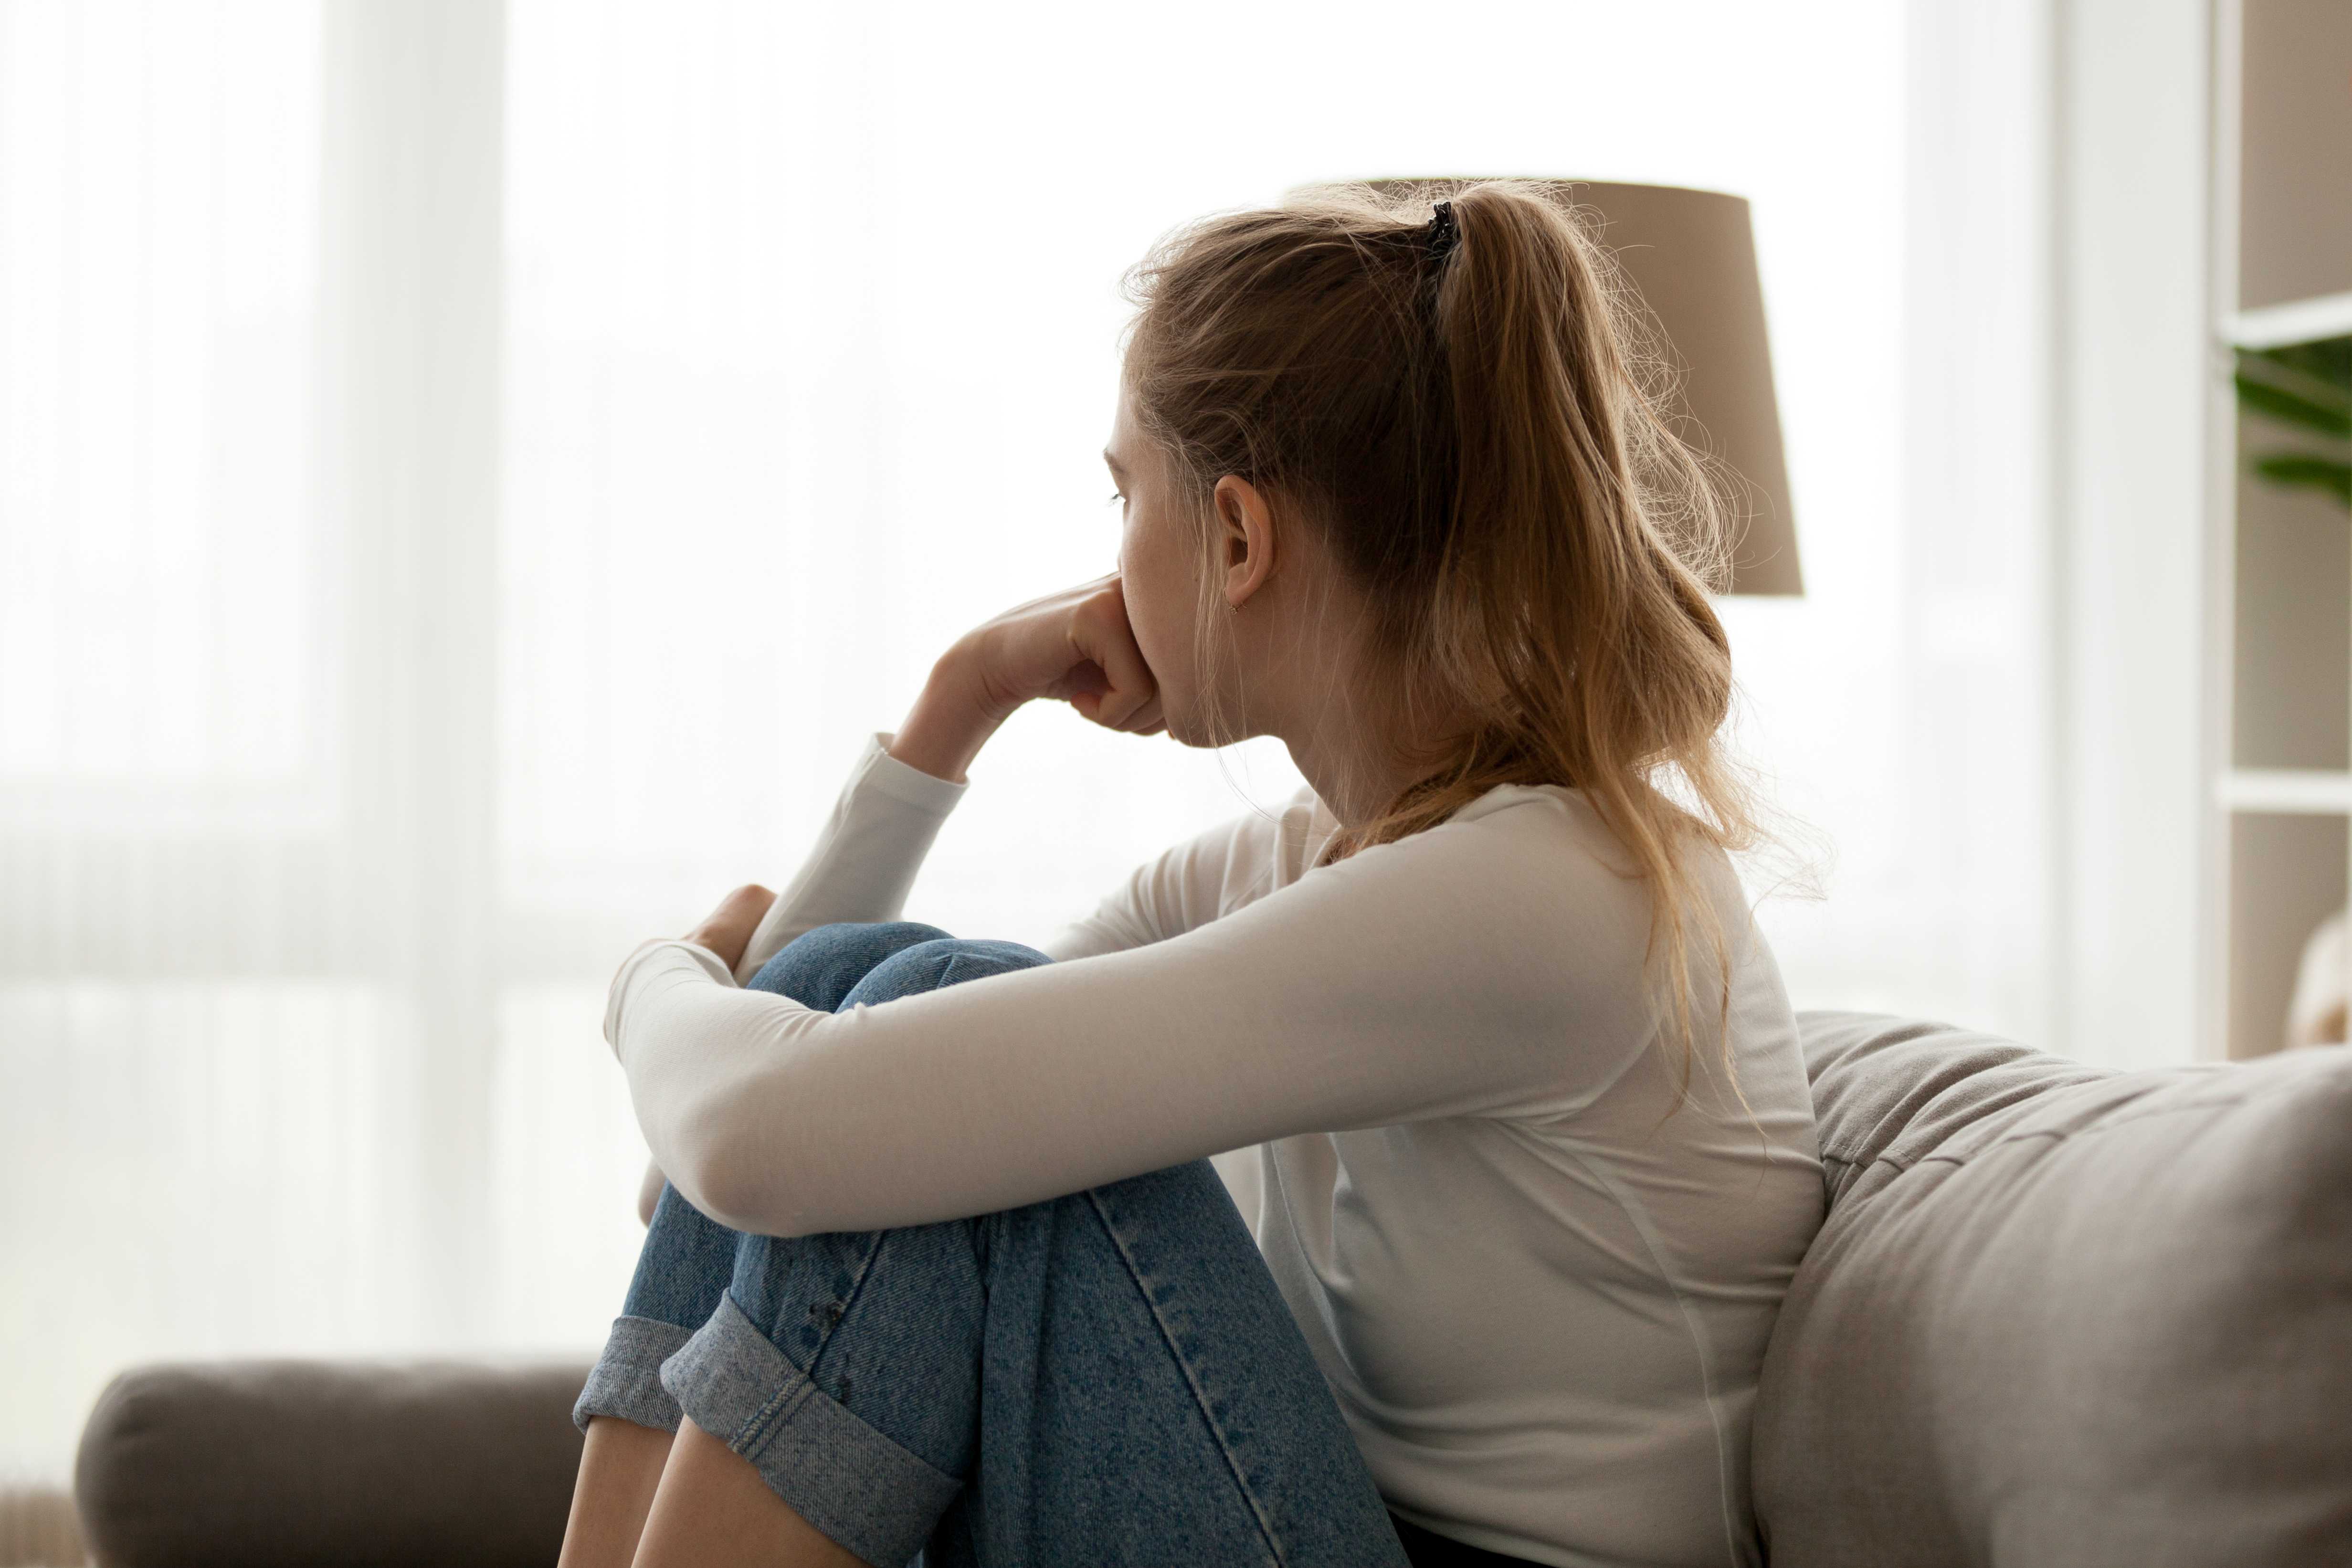 Sad woman sitting alone| Shutterstock